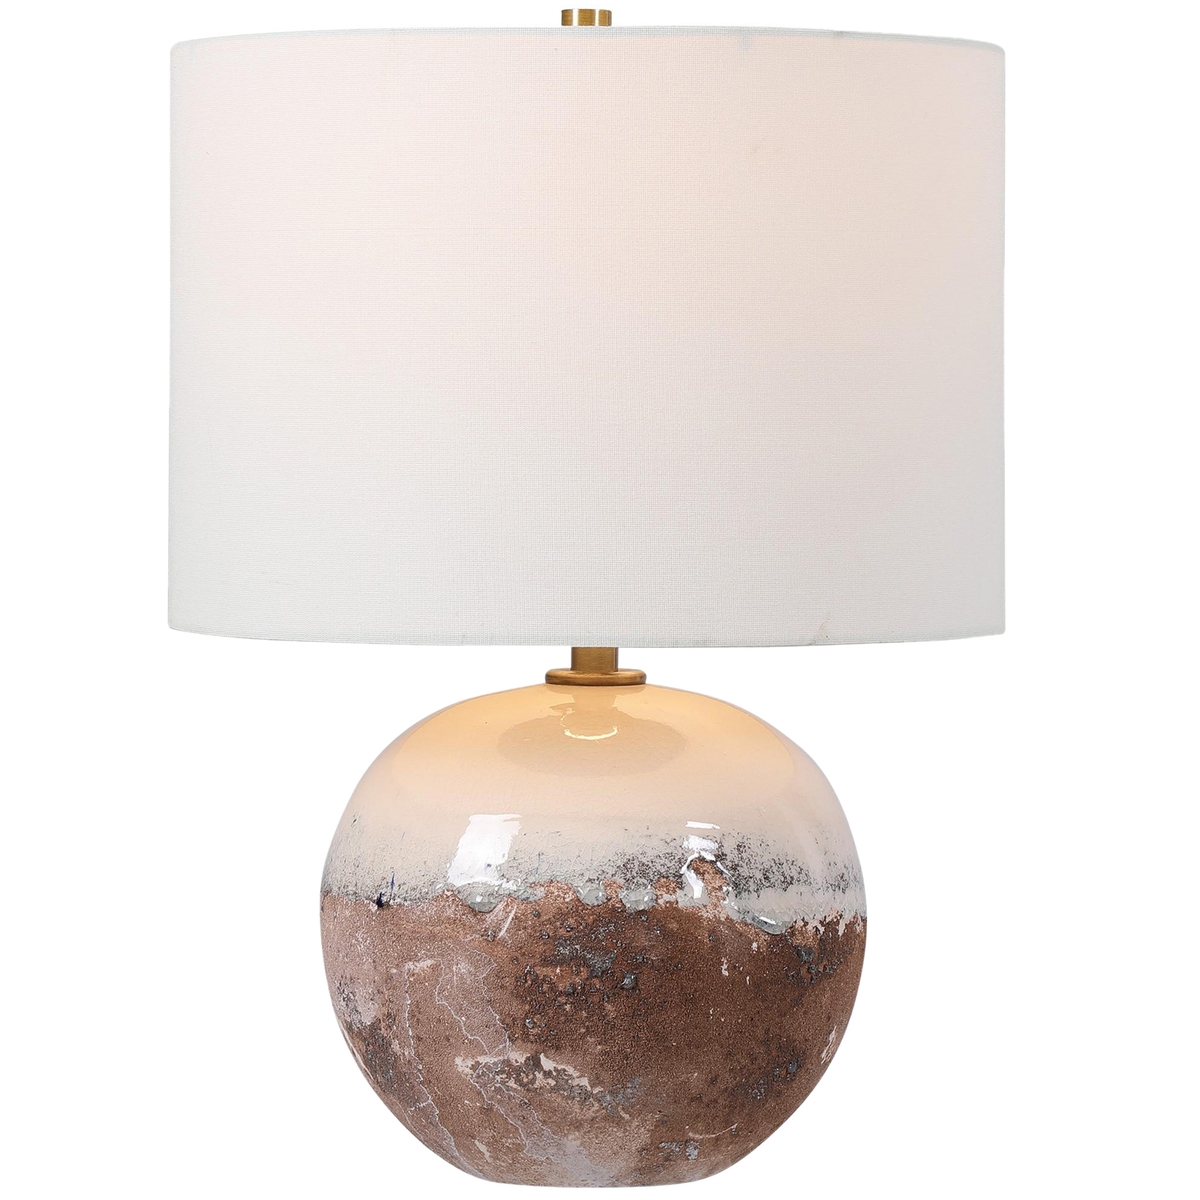 Durango Accent Lamp, Terracotta